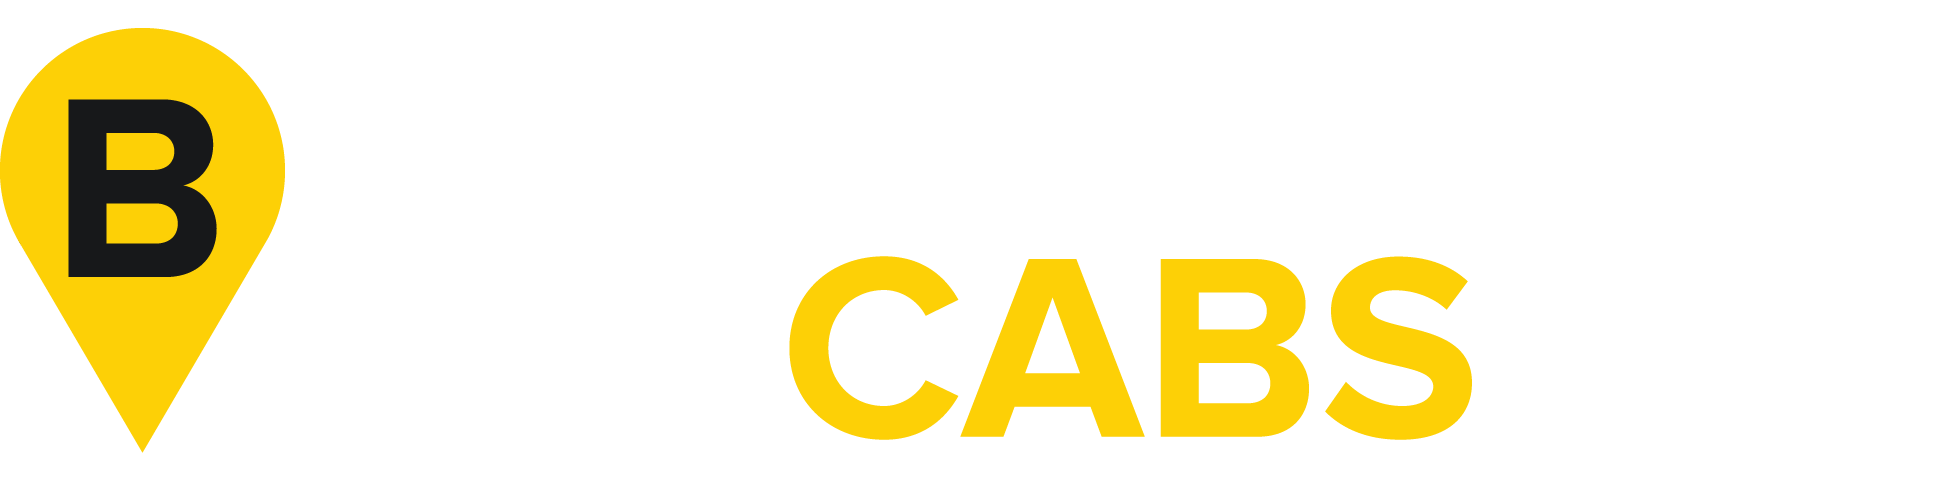 Bangalore Cabs